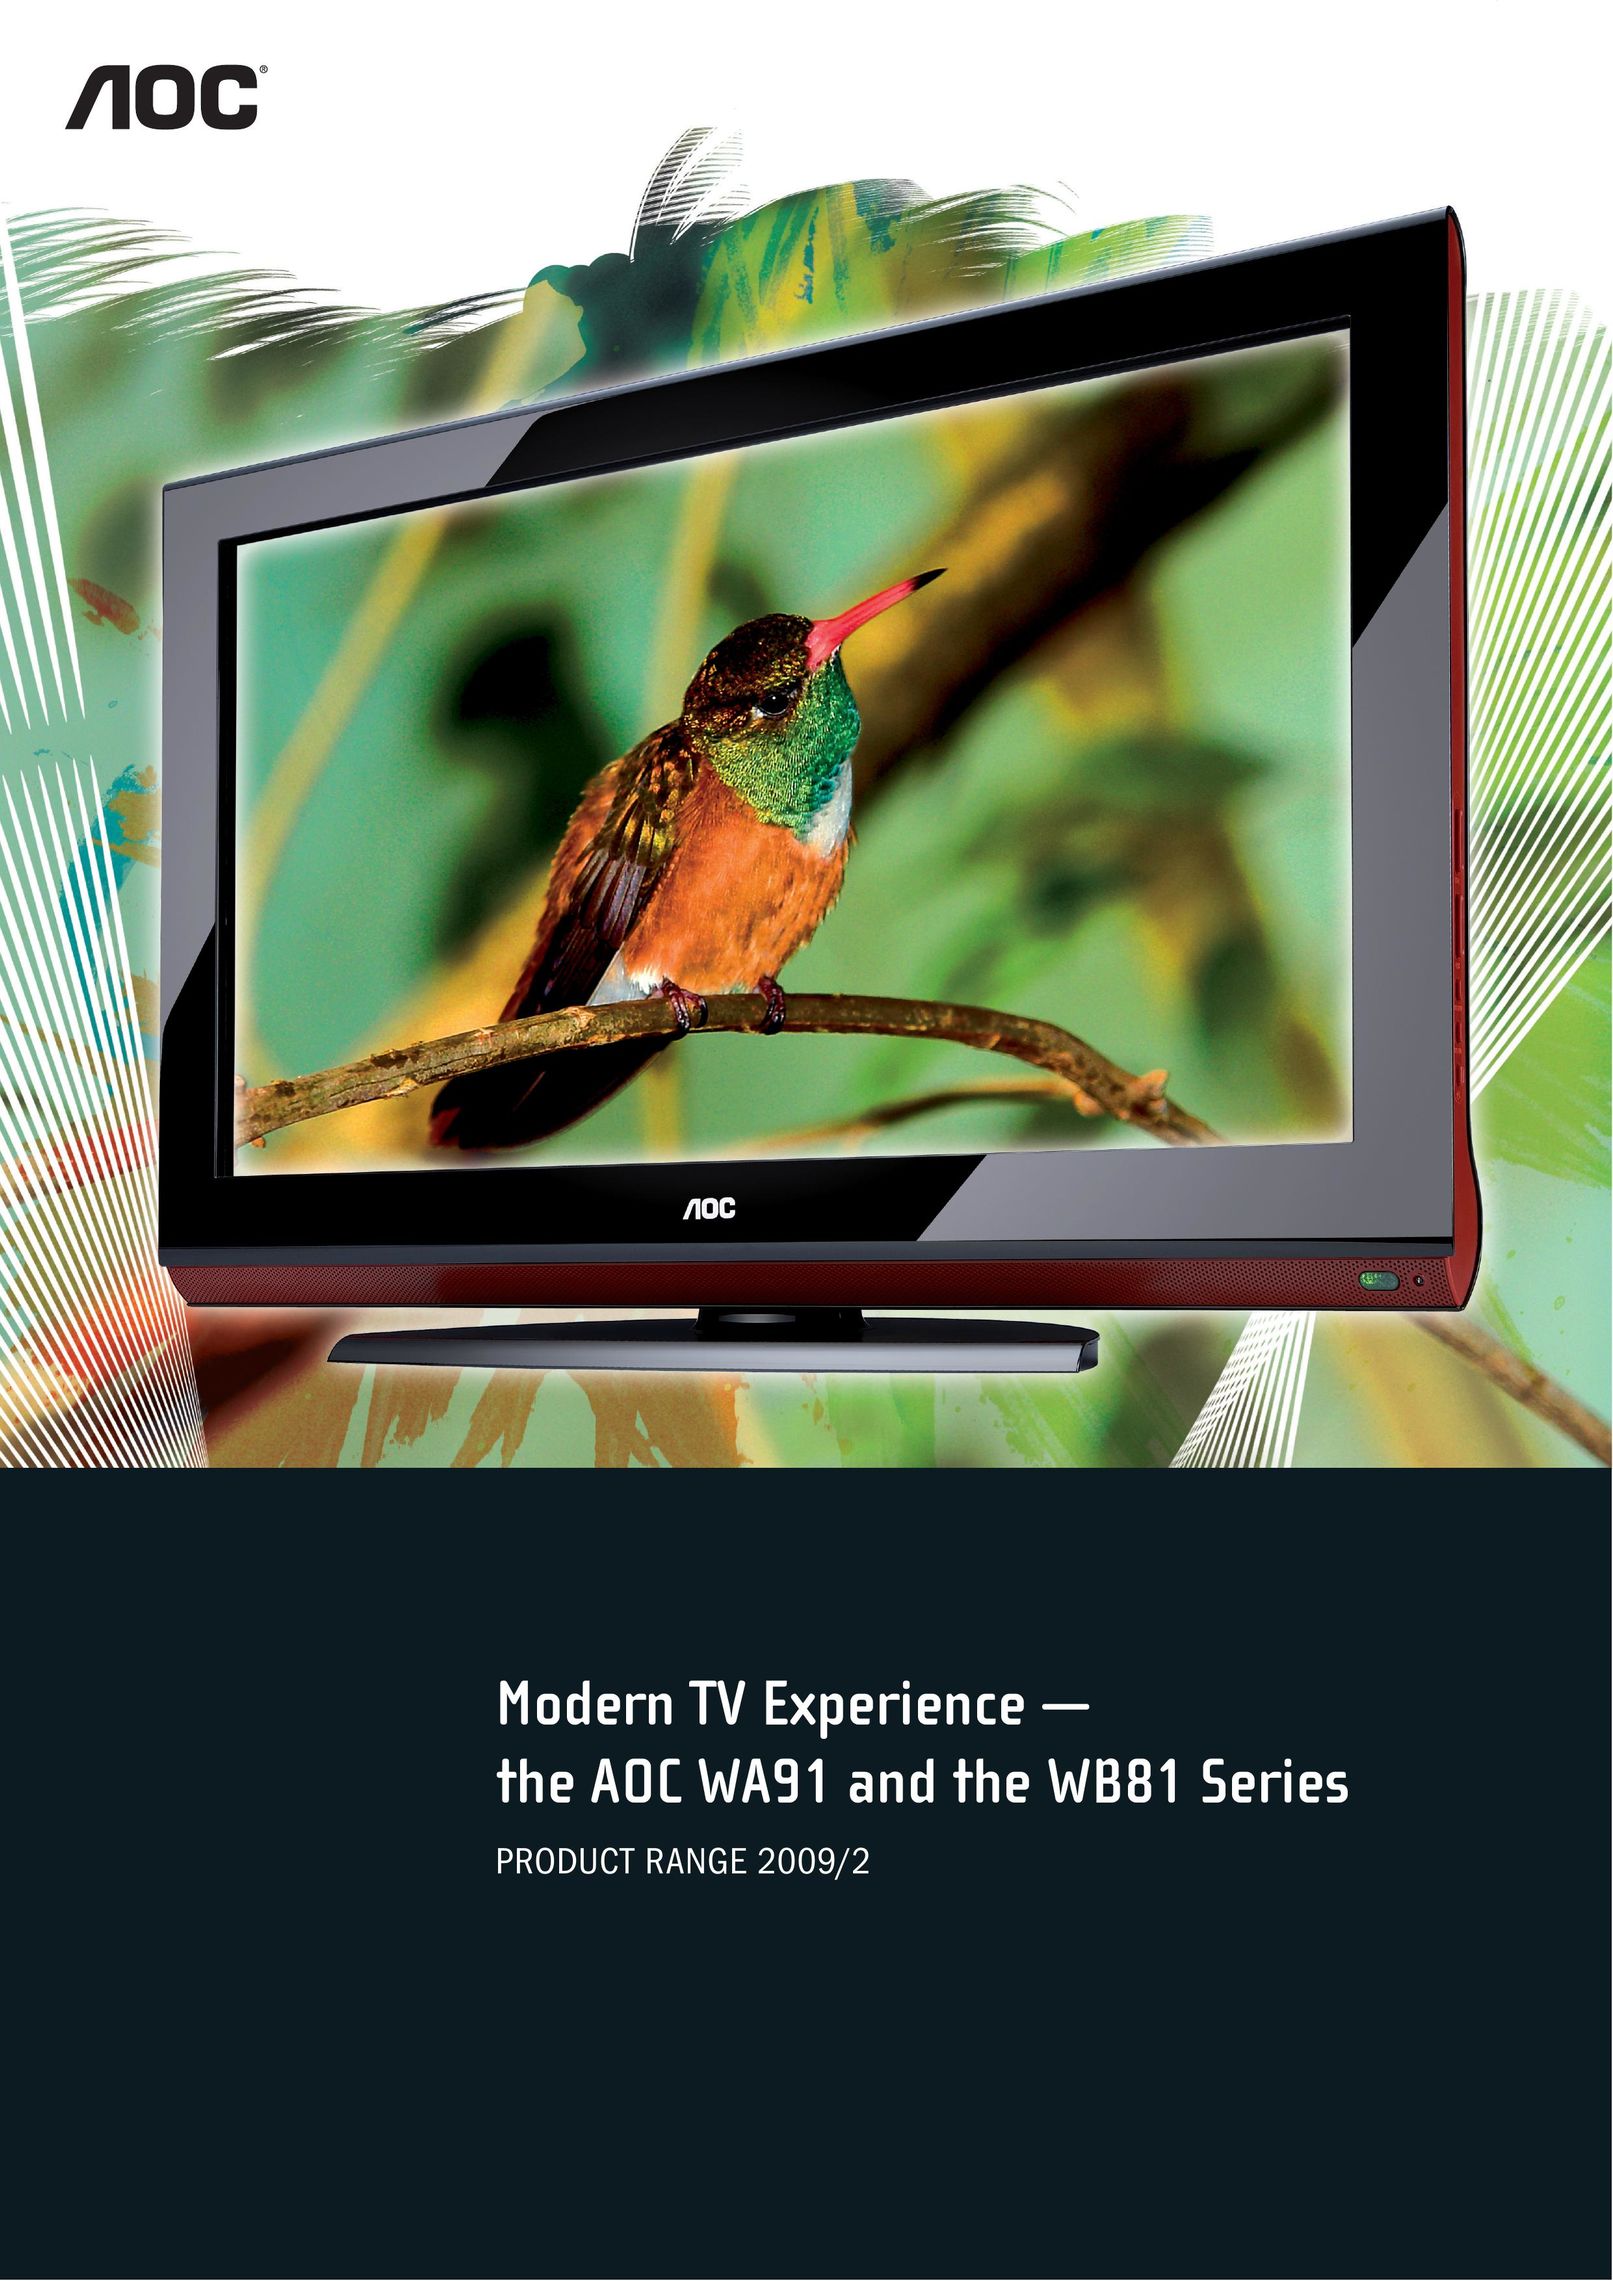 AOC WB81 Car Satellite TV System User Manual